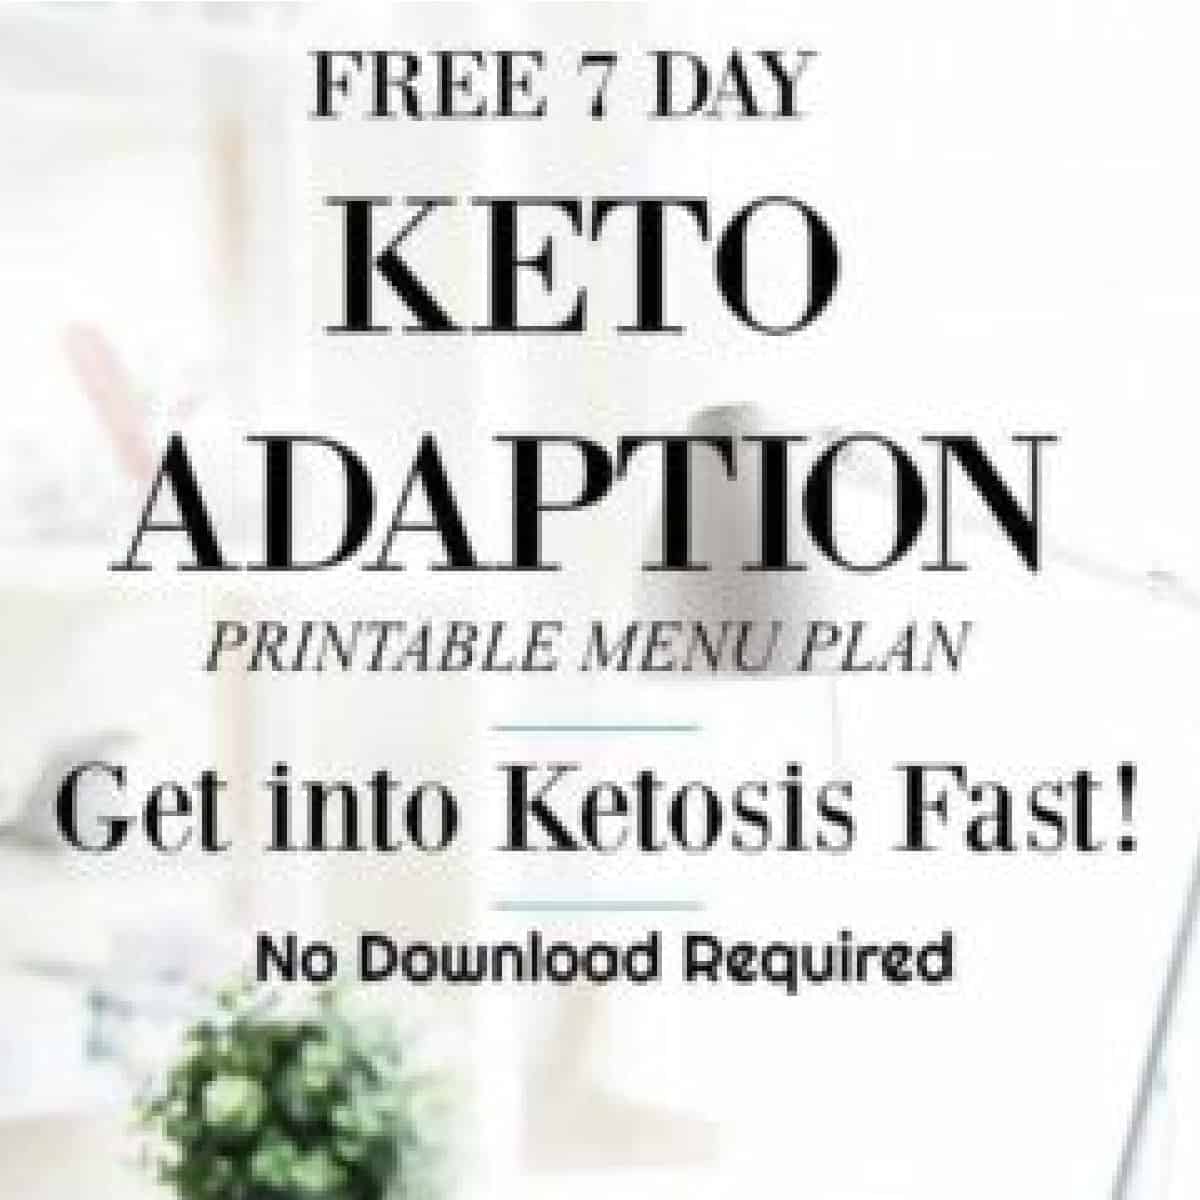 Keto Diet Plan- Get Into Ketosis Fast